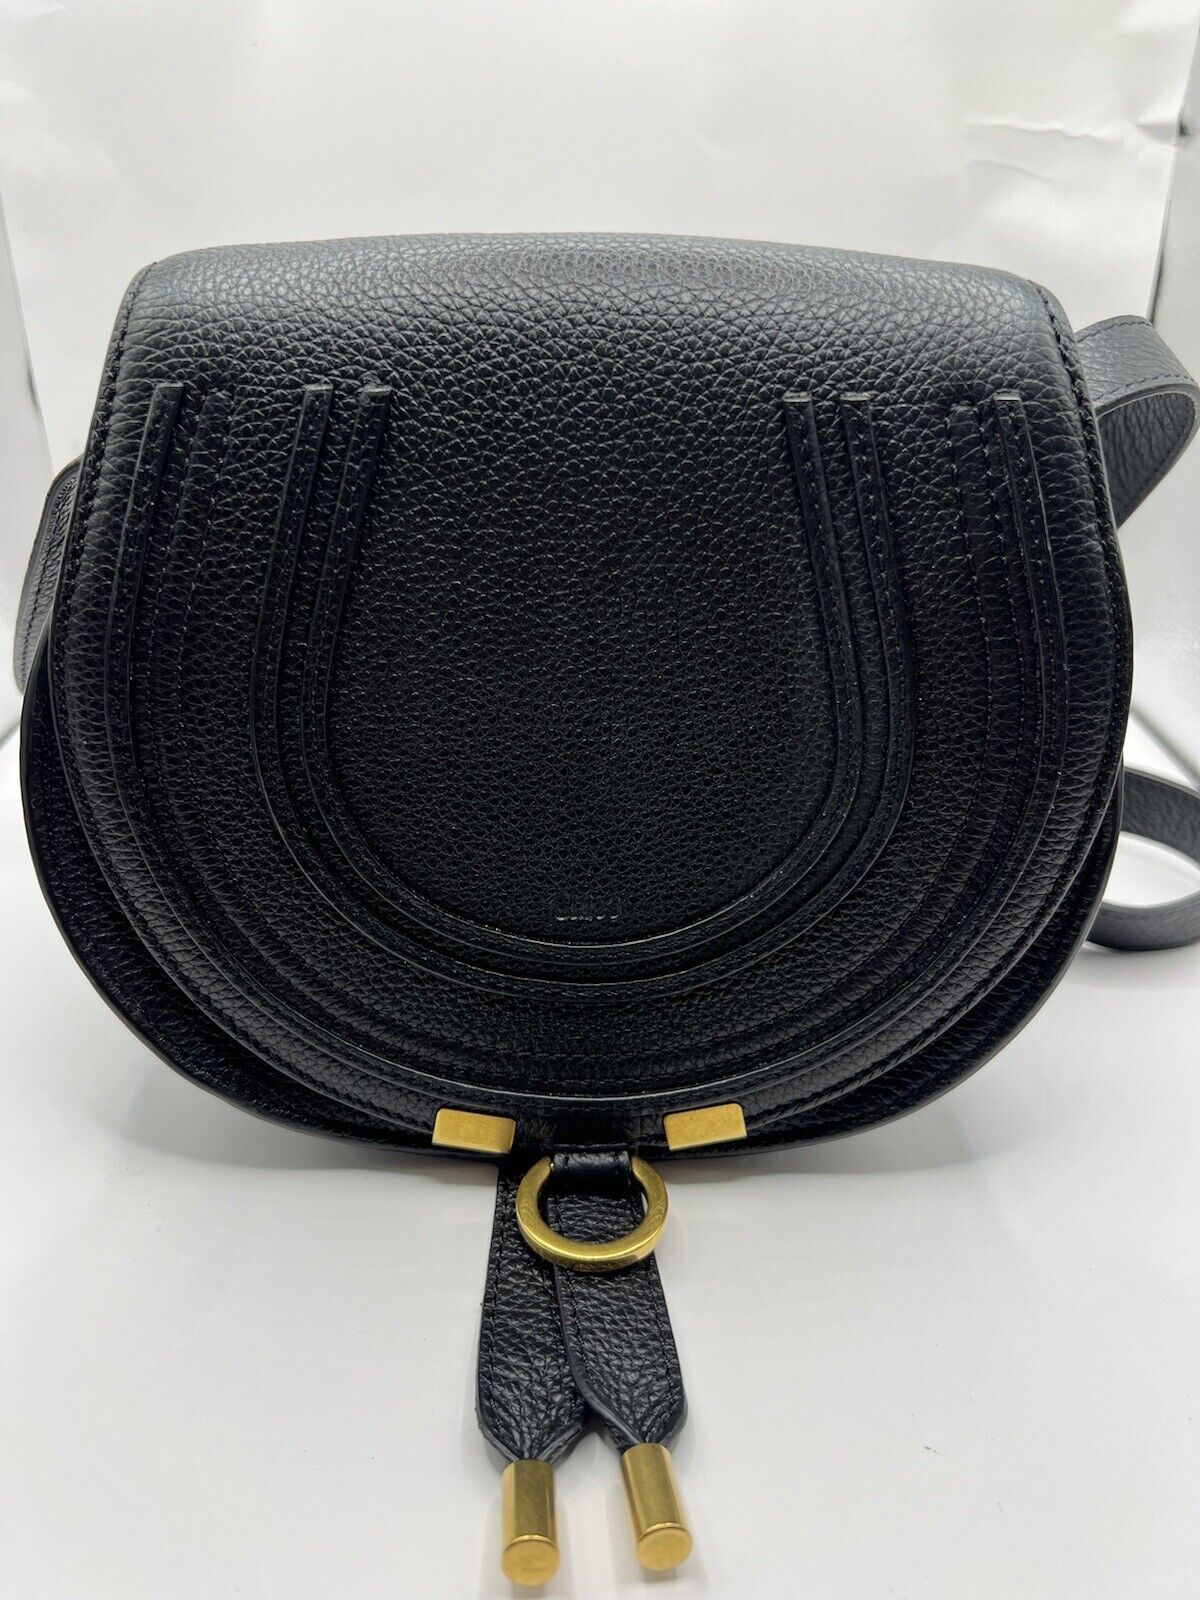 Chloe Nano Marcie Leather Saddle Bag Black Gold $750